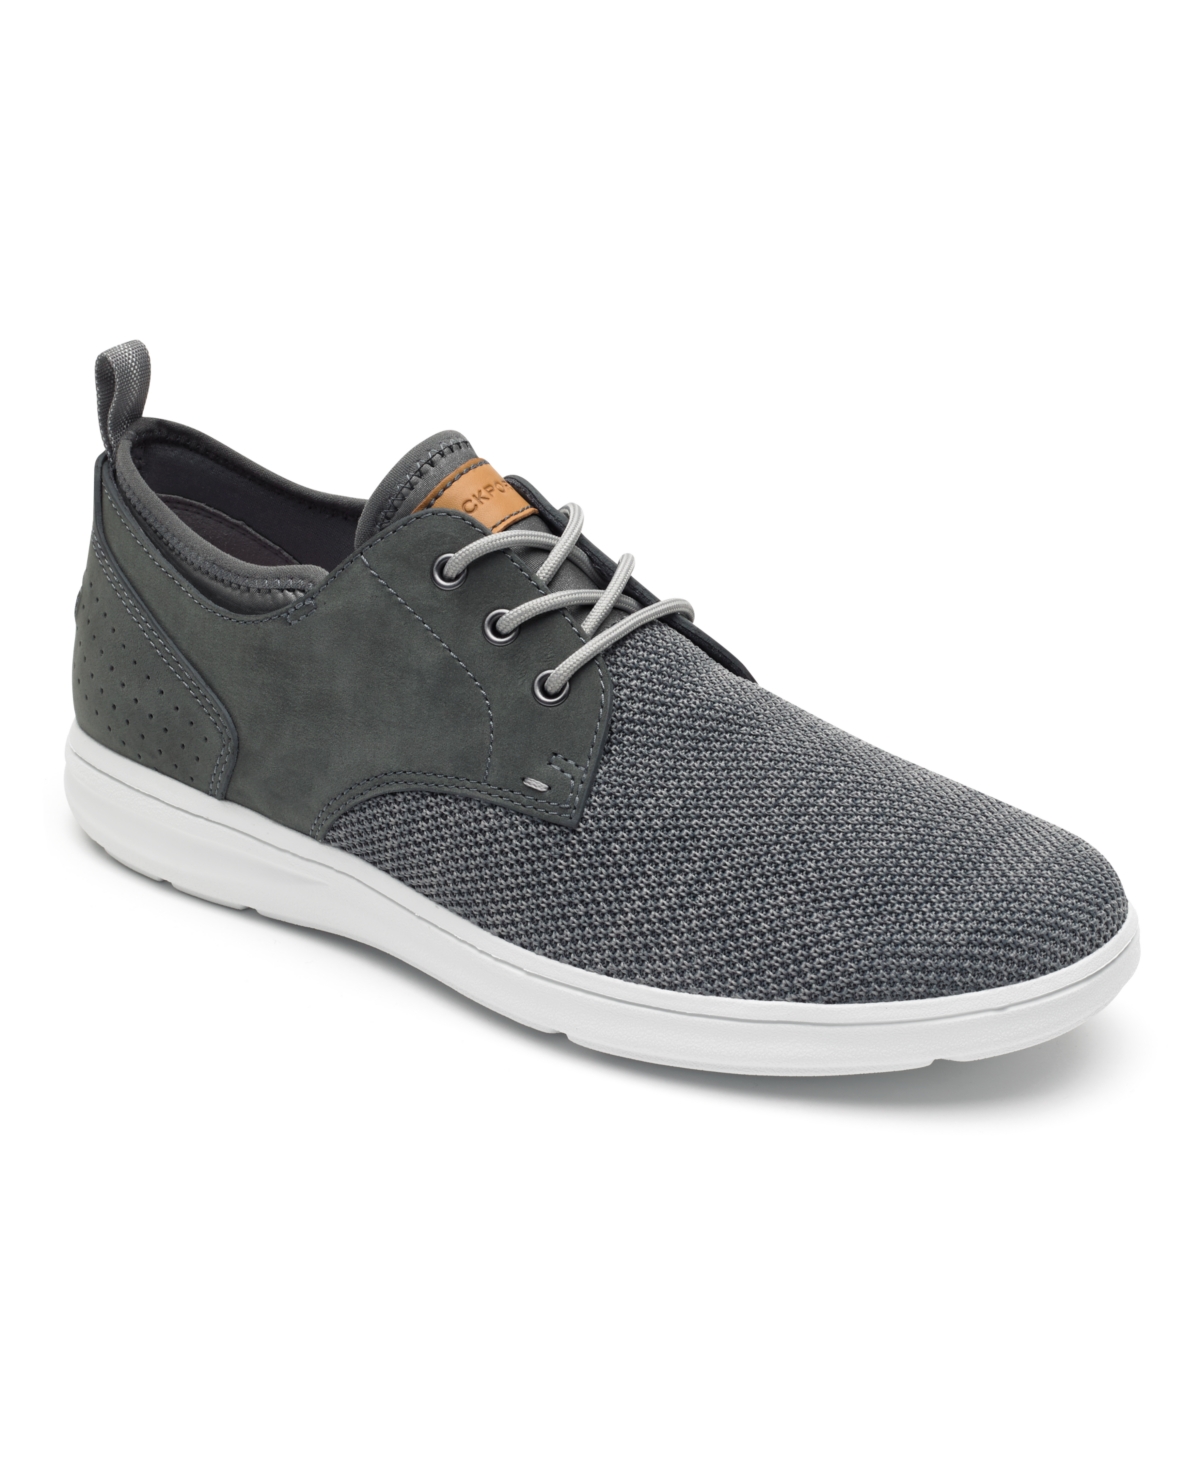 Men's Zaden Plain Toe Oxford Shoes - Gray